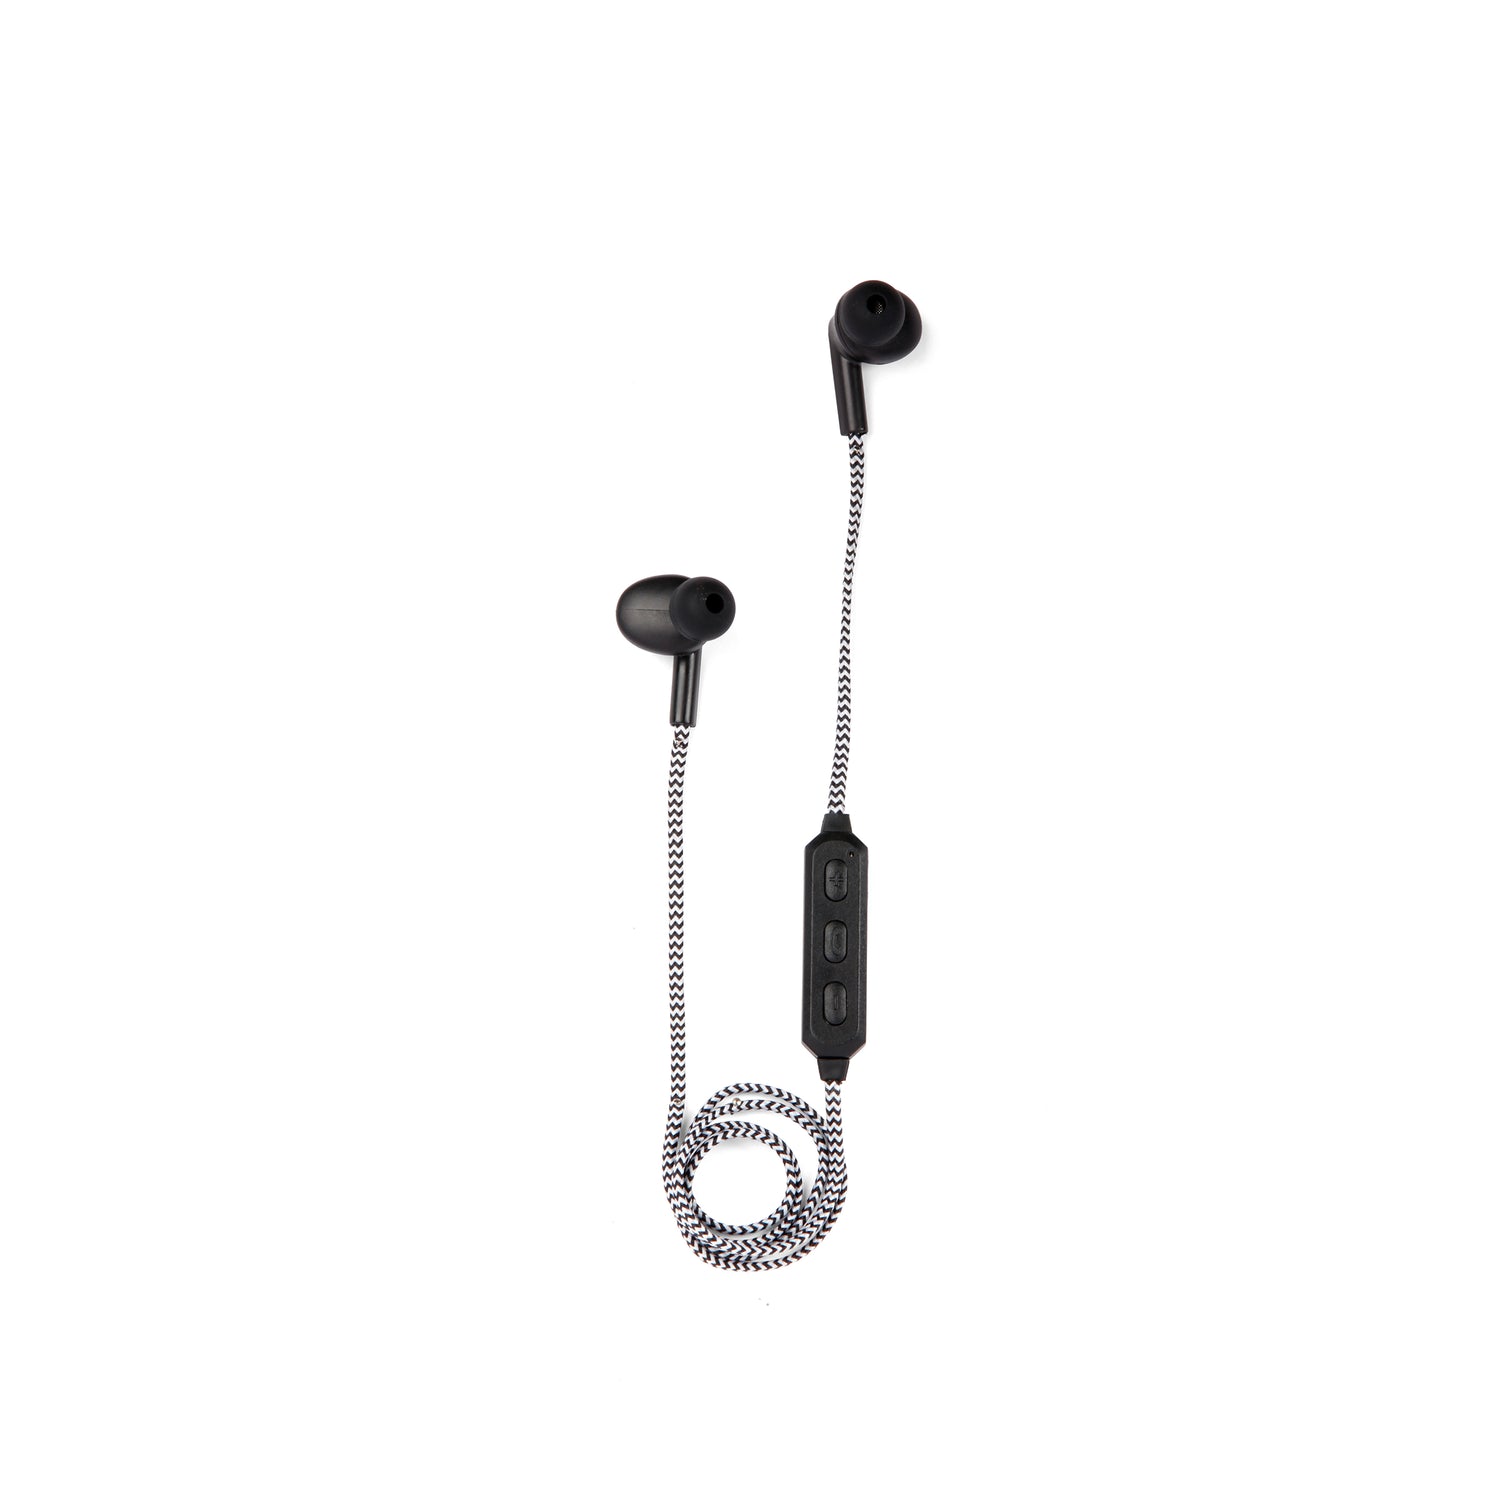 Black Cotton Braided Wireless Earbuds – Kikkerland Design Inc